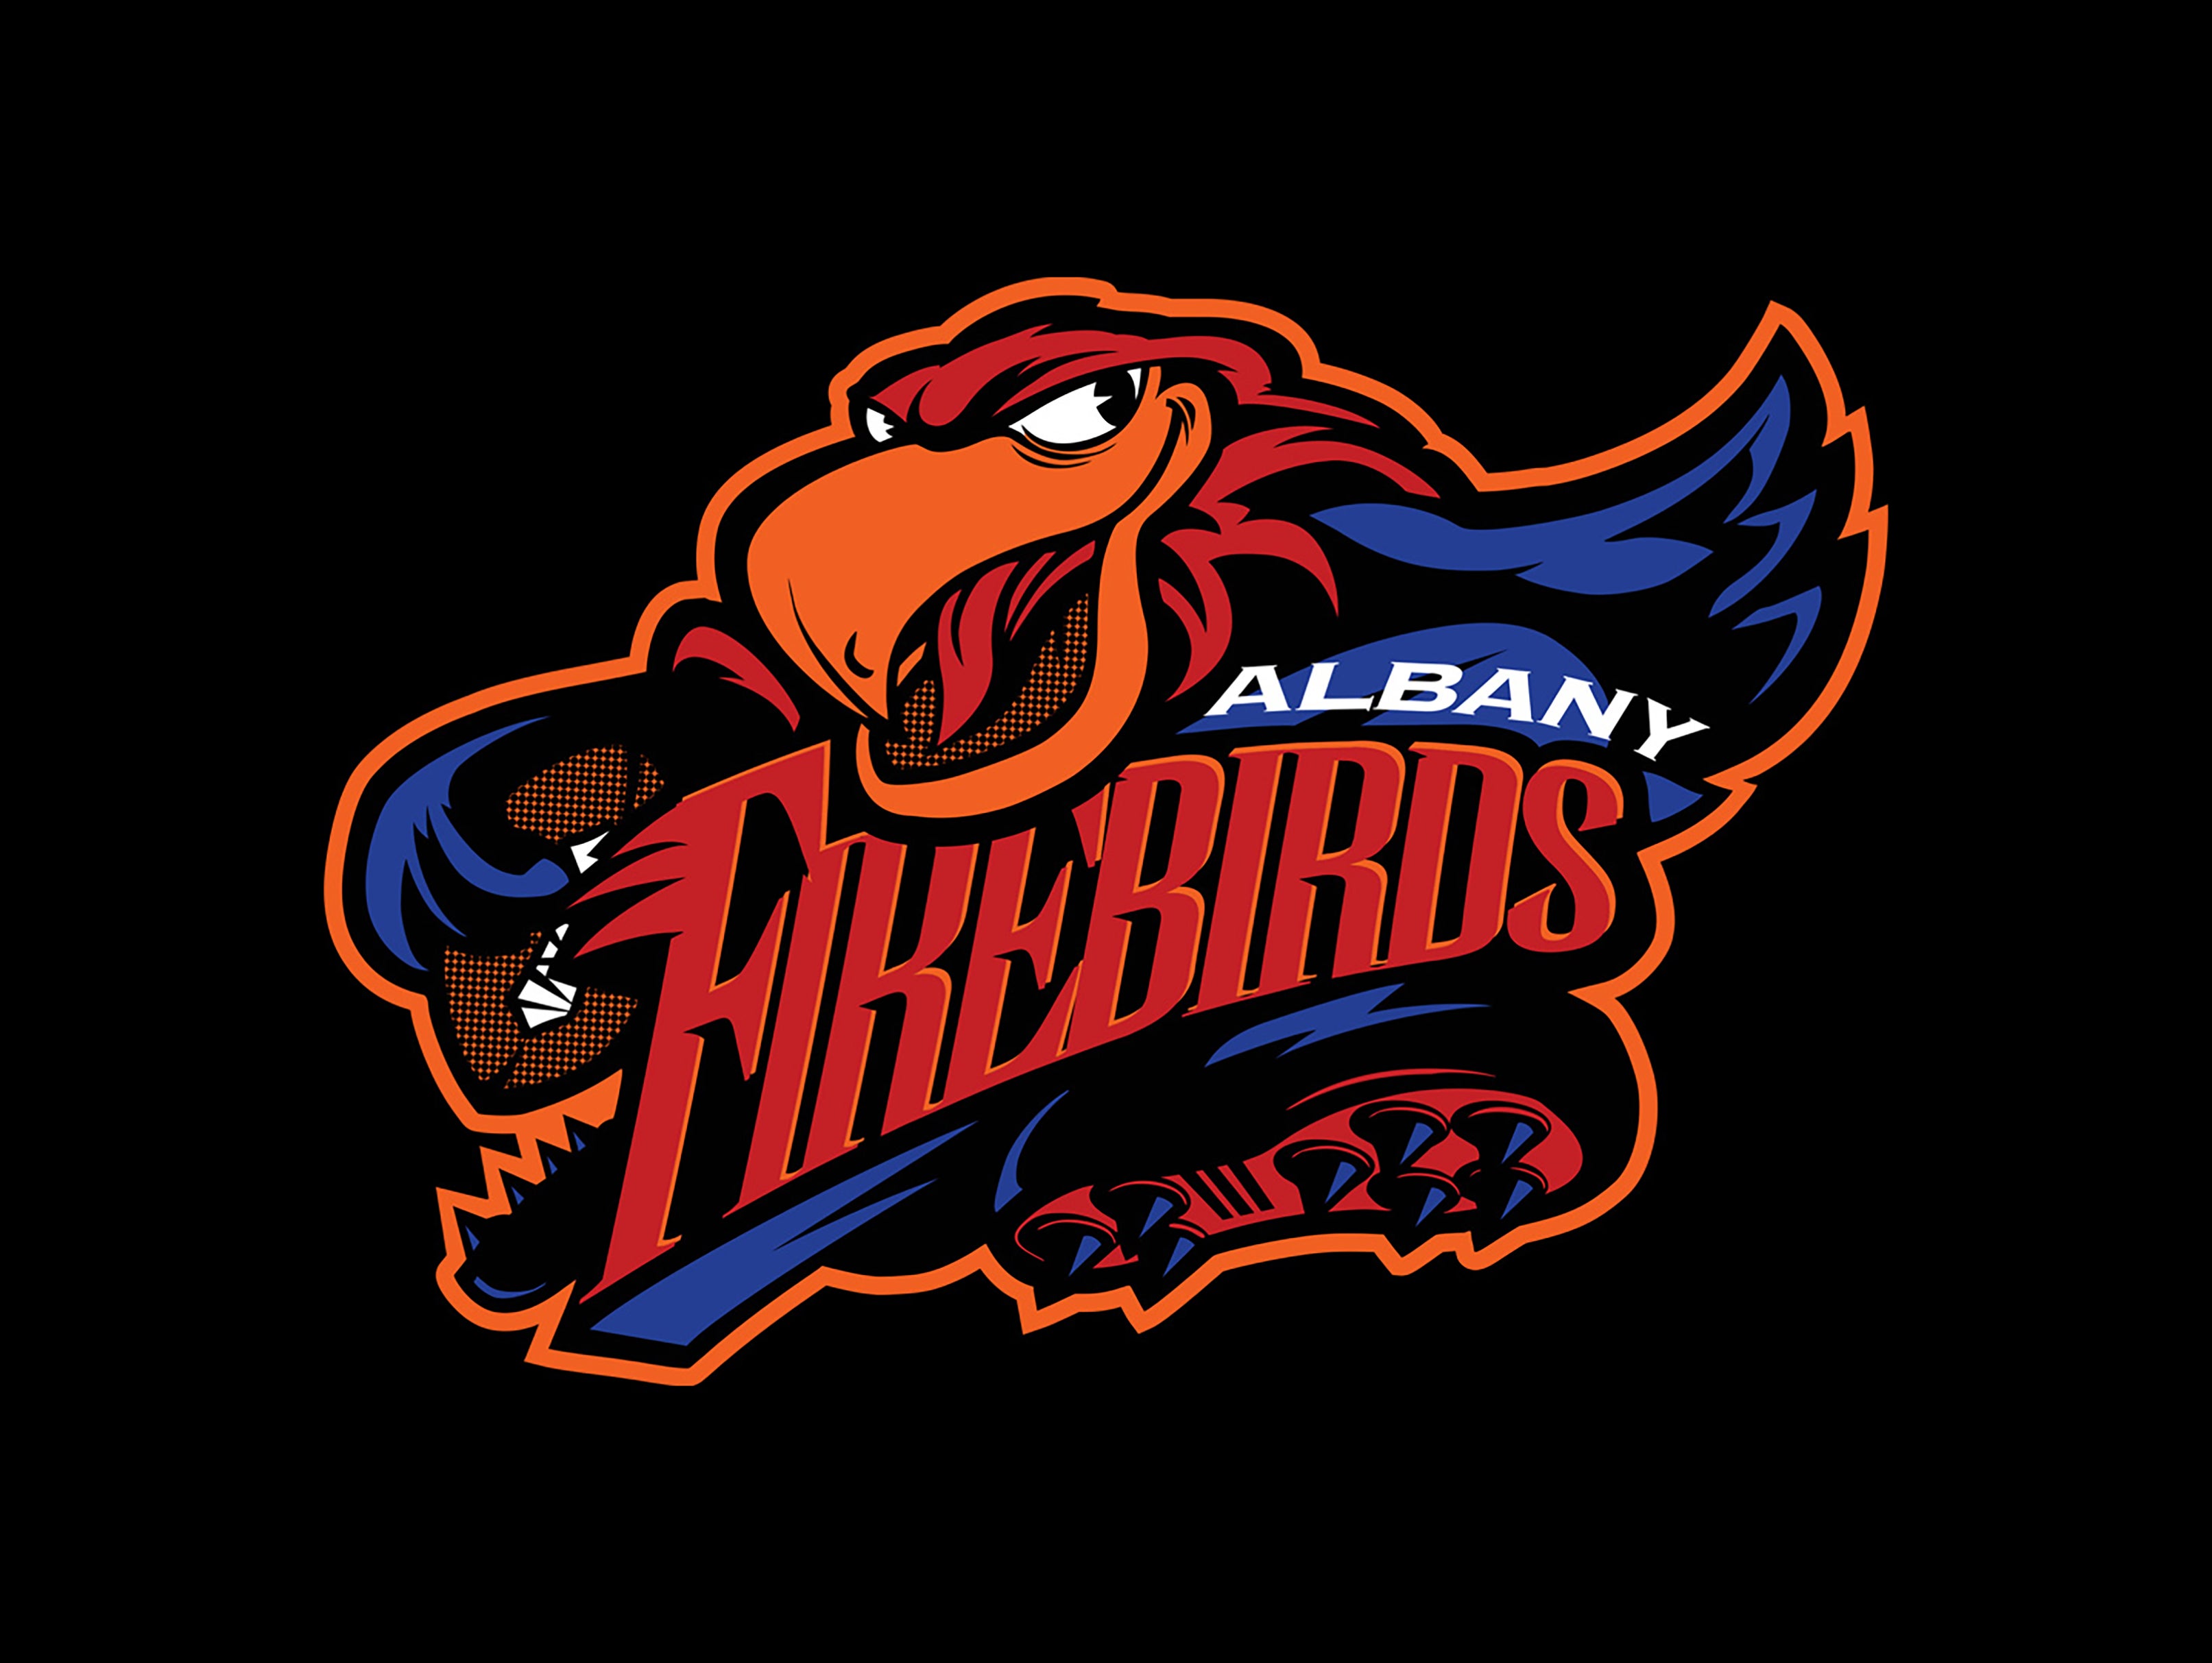 Albany Firebirds vs. Orlando Predators